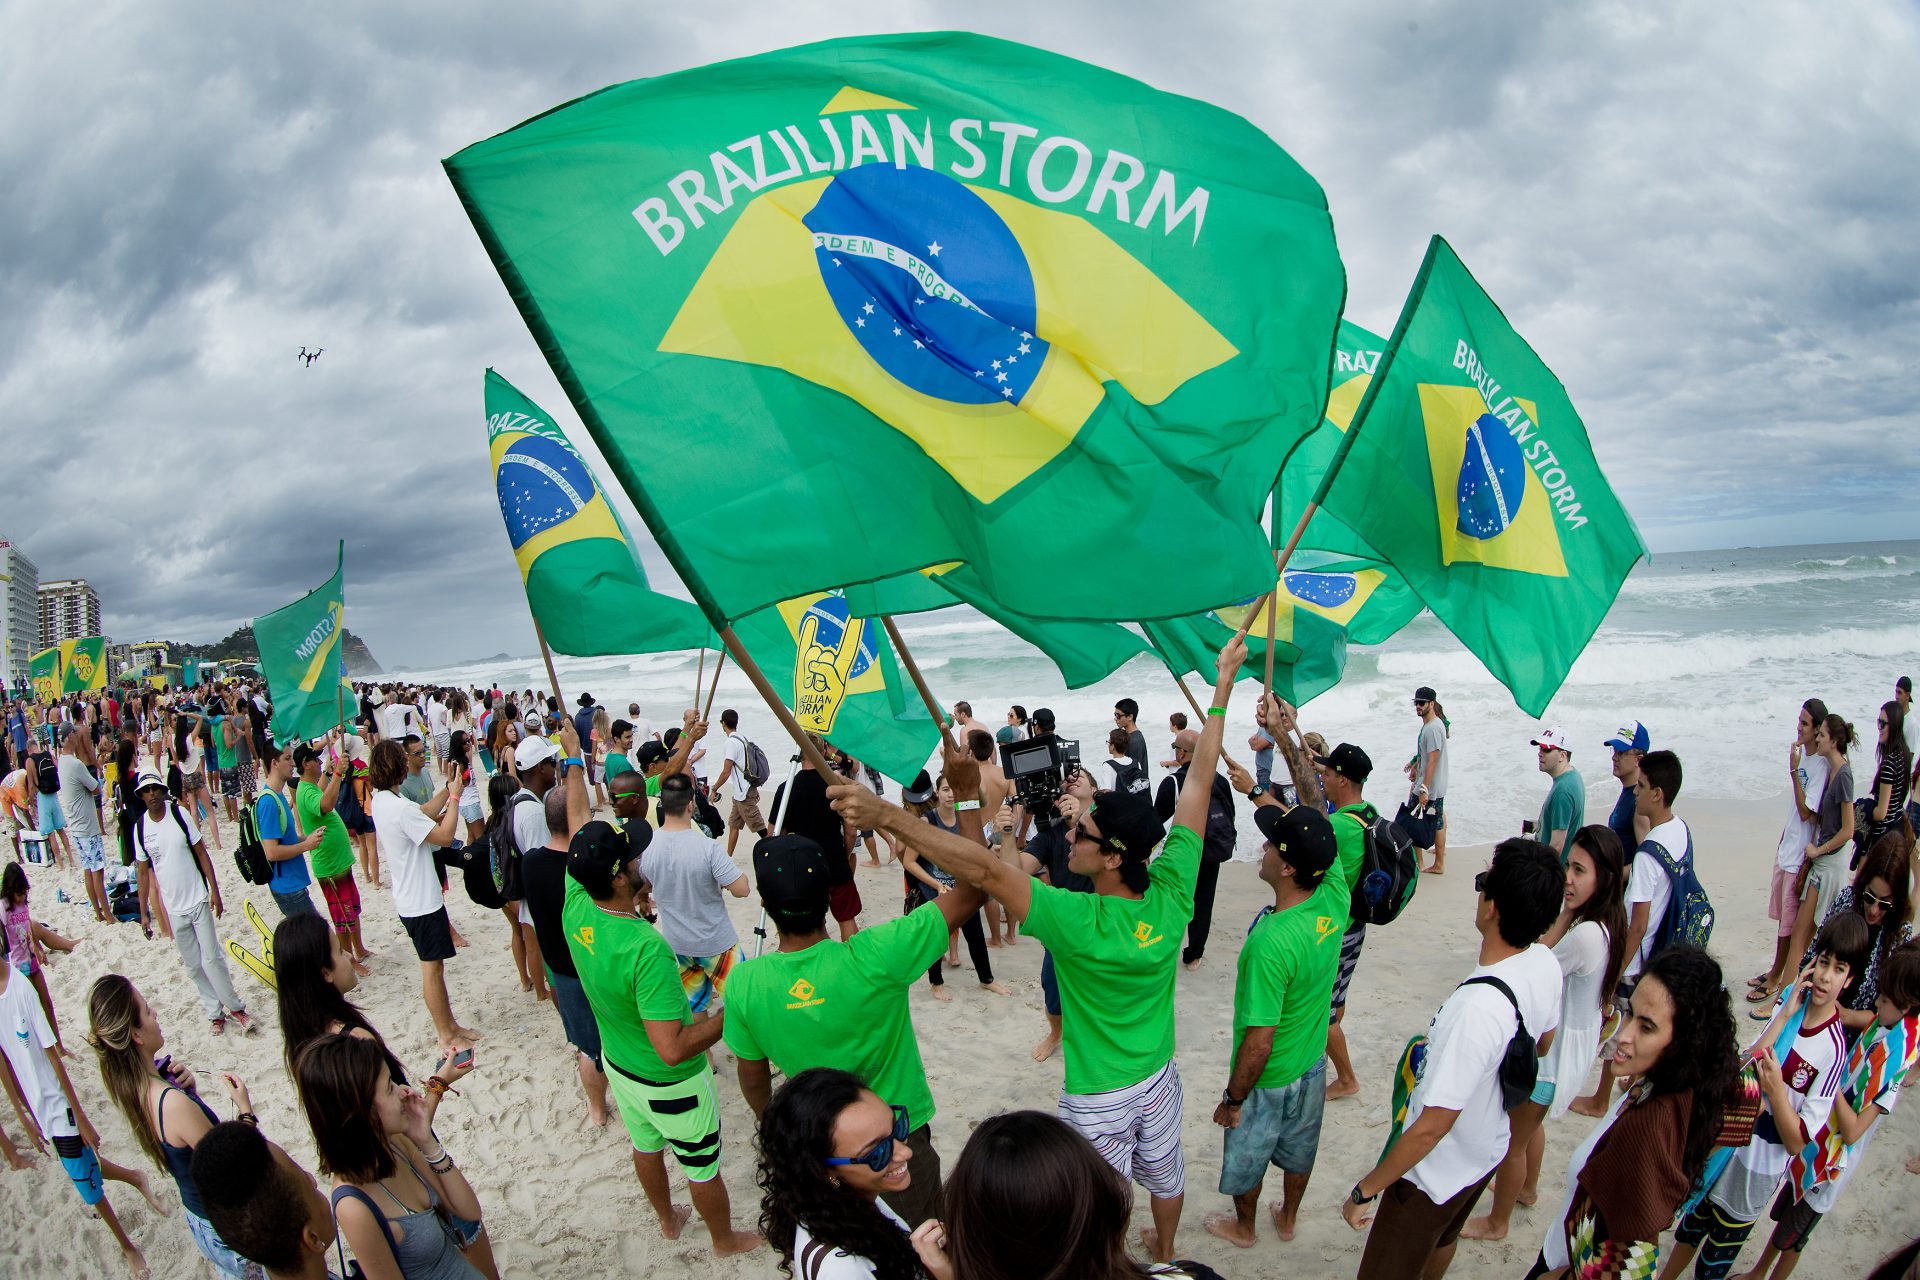 Brazilian Storm